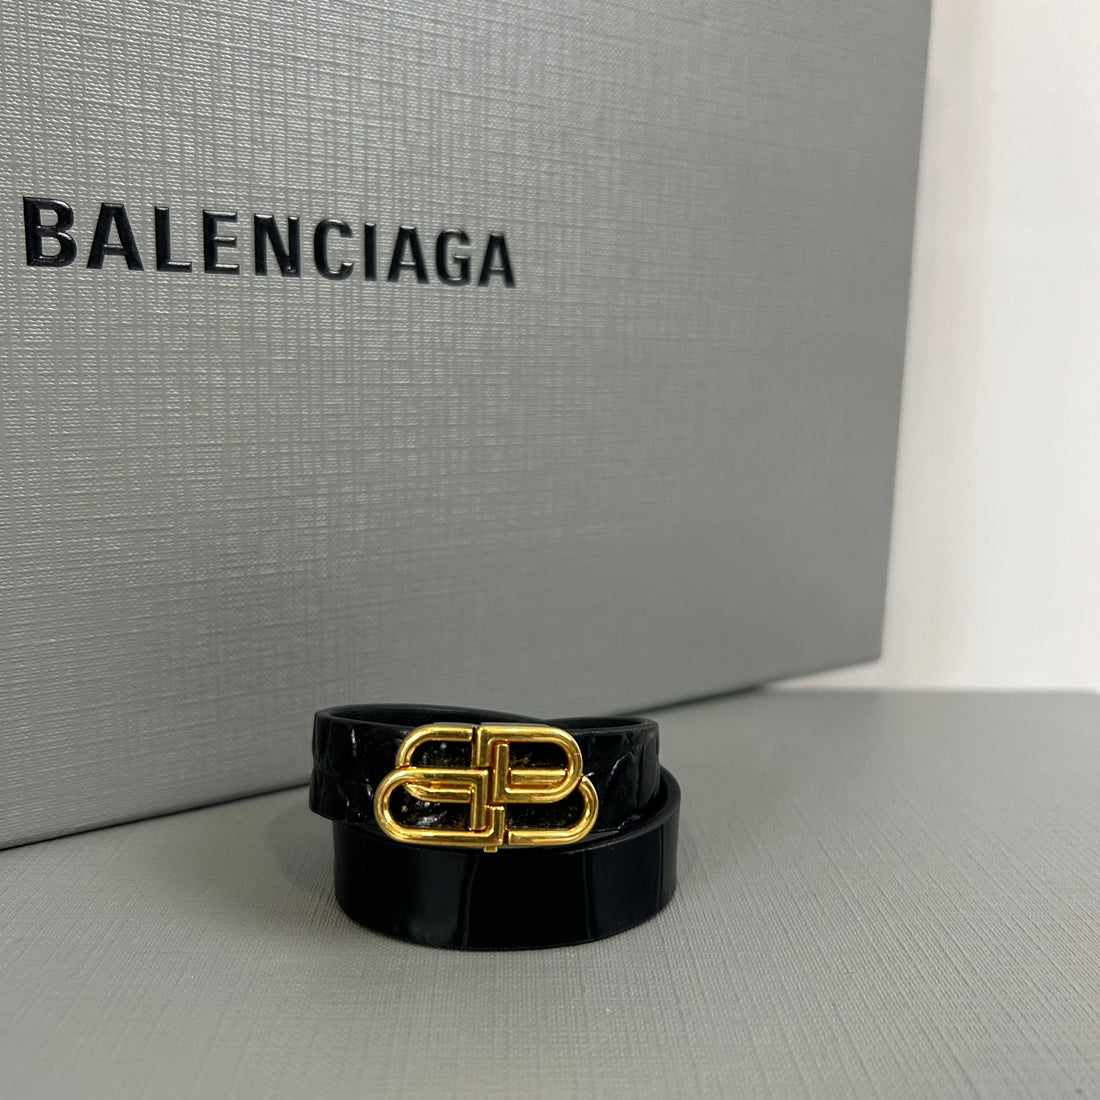 Balenciaga - Bracelet Double Tour